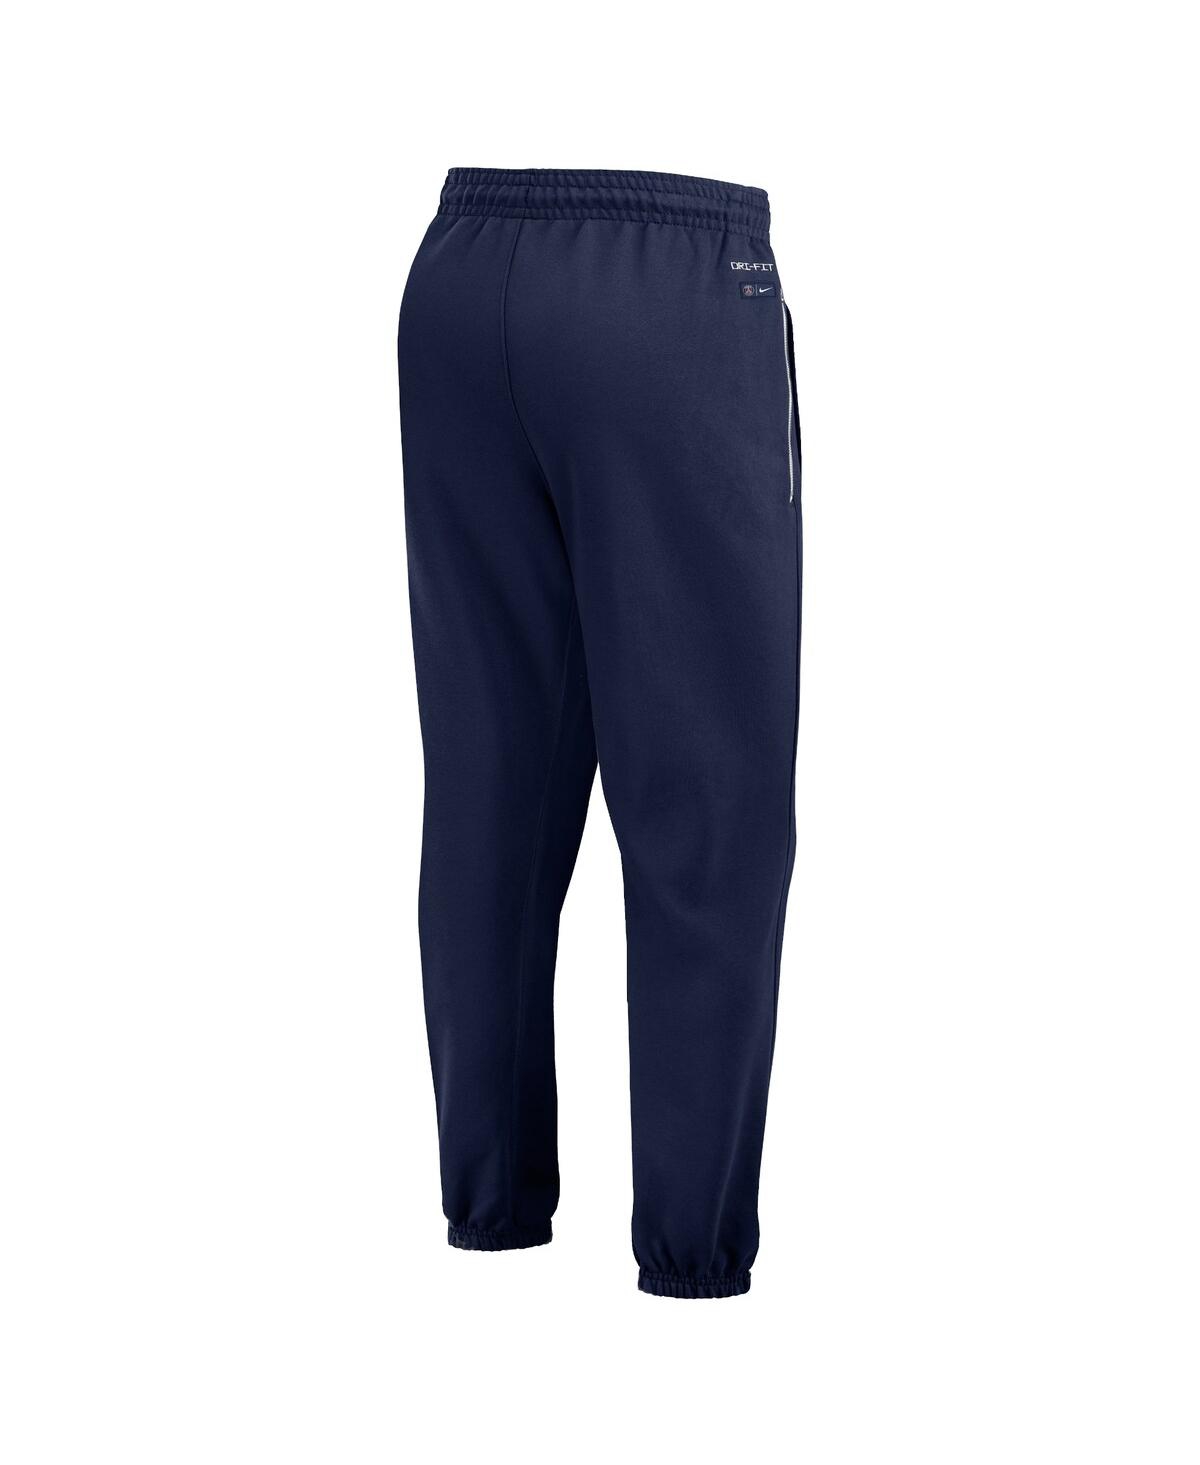 Shop Nike Men's  Navy Paris Saint-germain Standard Issue Performance Pants